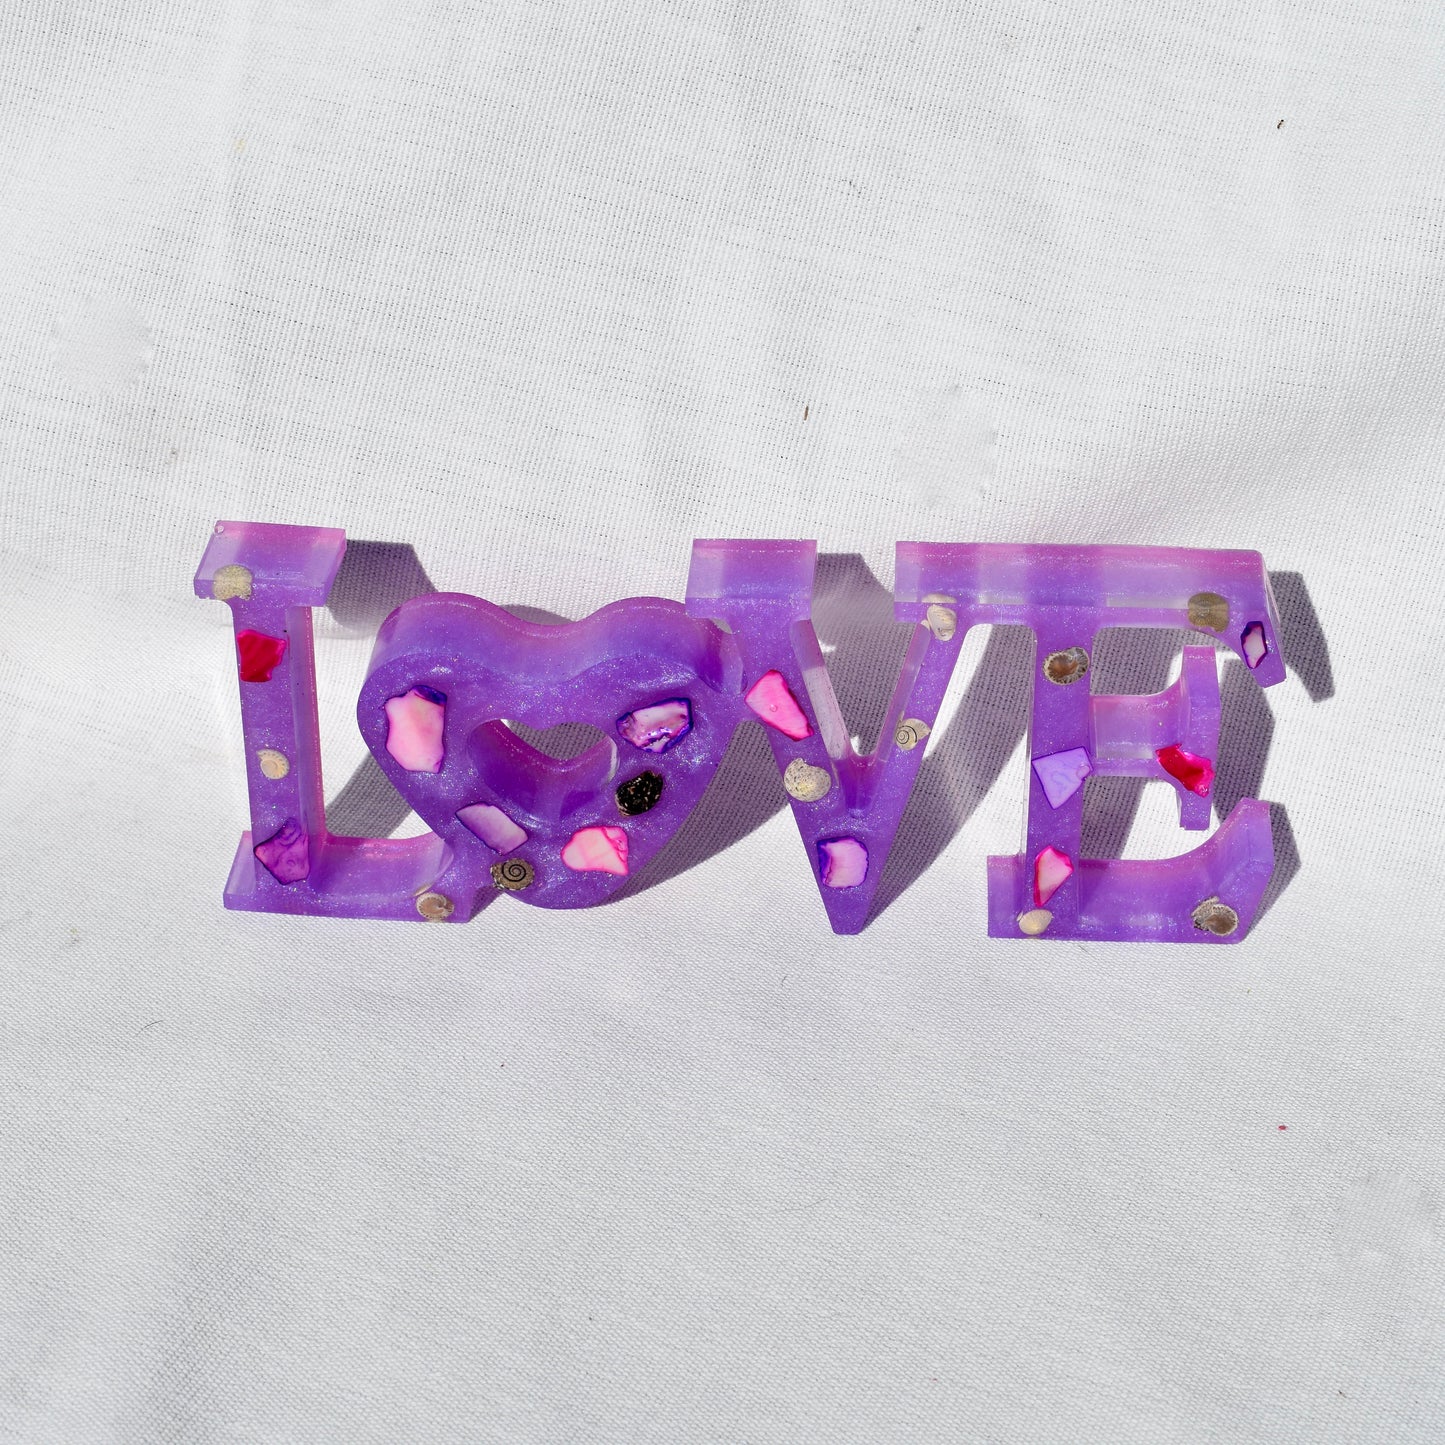 “Love” Word Art • Beach Themed Resin Word Art “LOVE” Decor